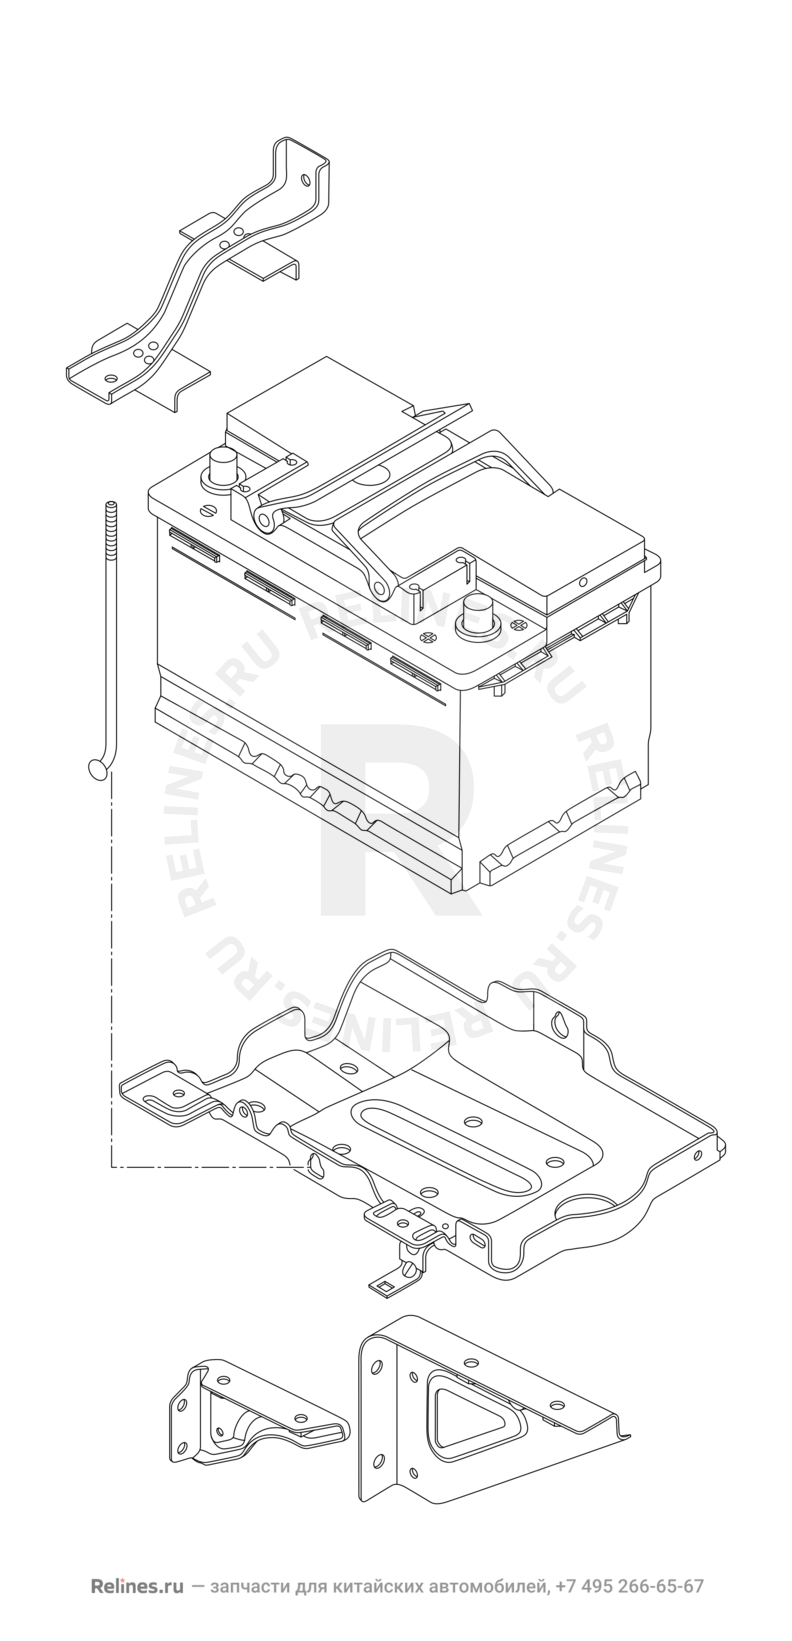 Запчасти Chery Tiggo 5 Поколение I (2013)  — Аккумулятор (2) — схема